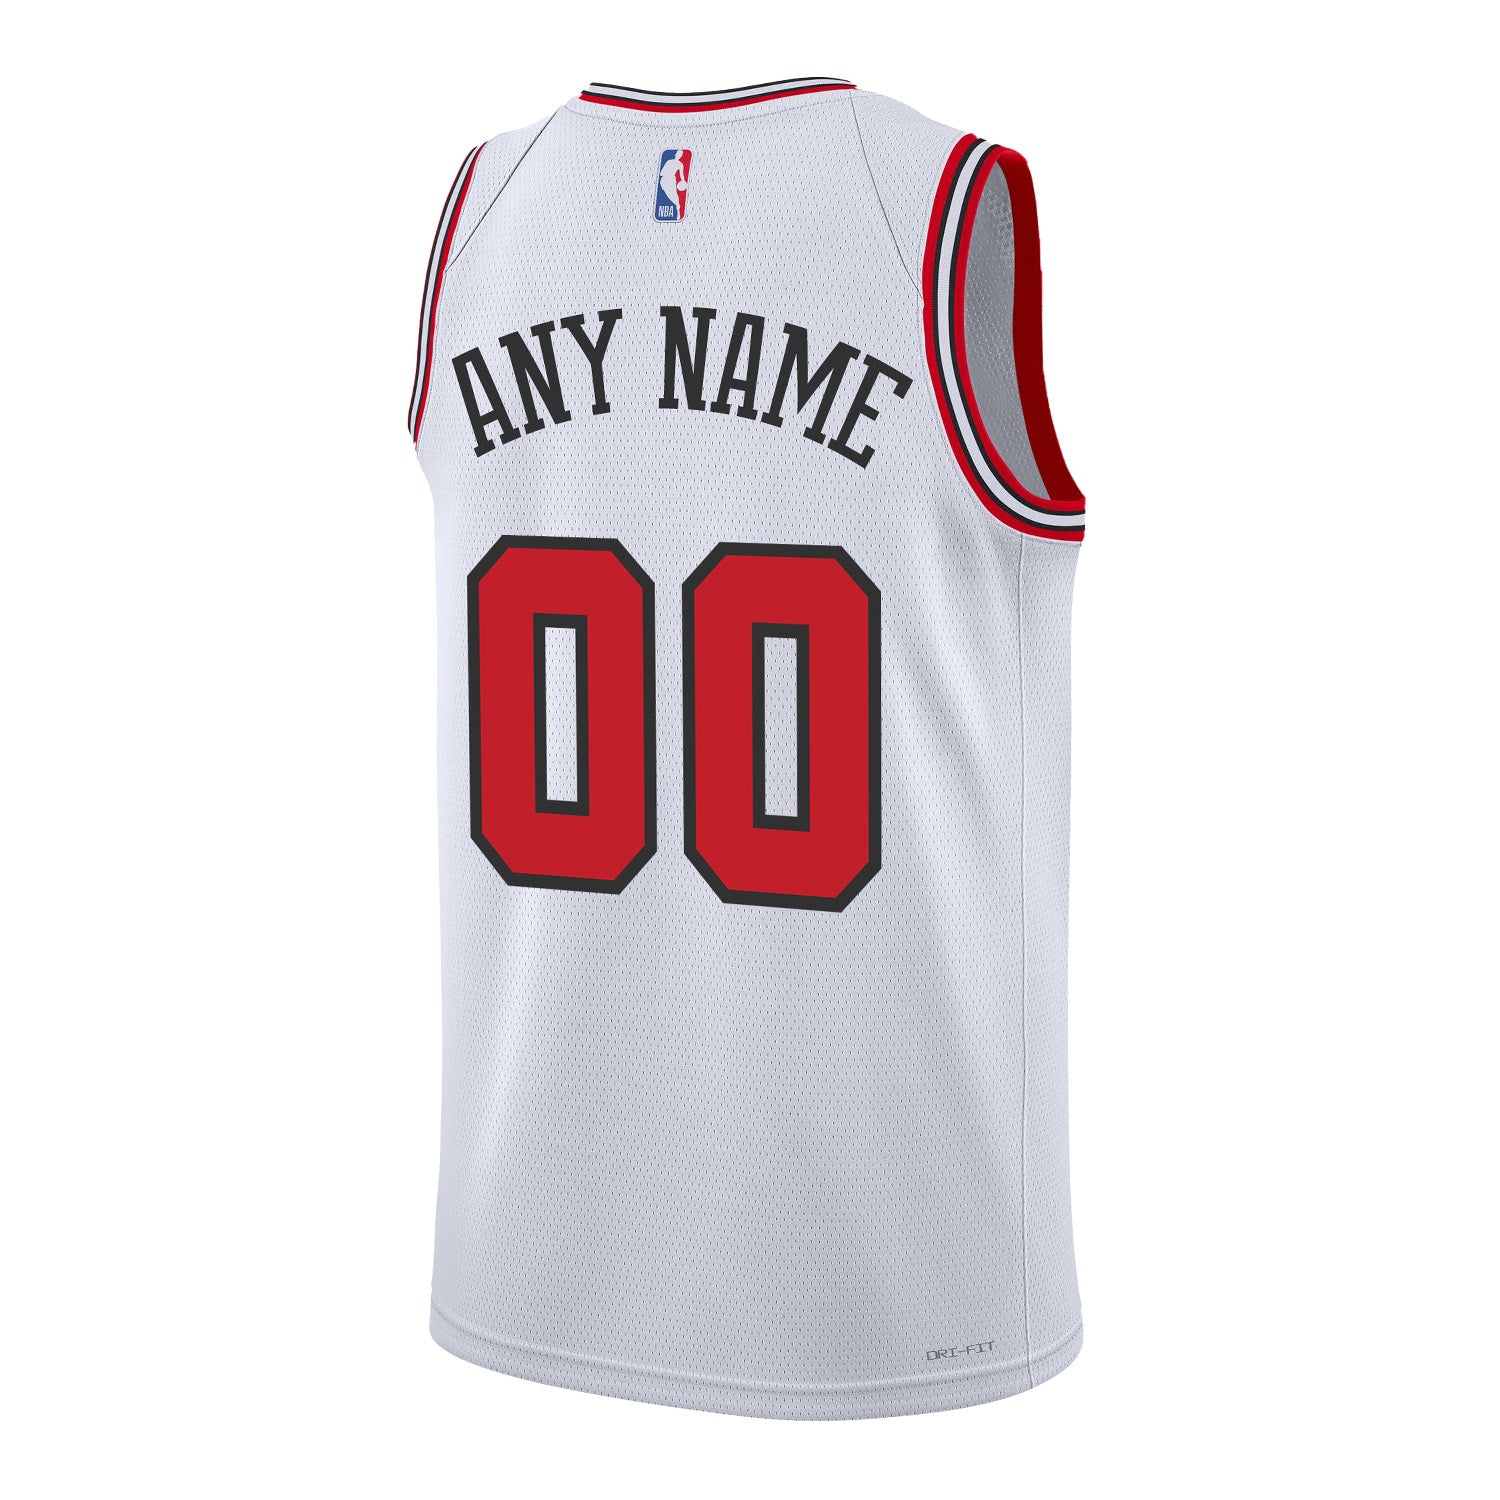 Chicago Bulls Personalized Nike Icon Edition Swingman Jersey